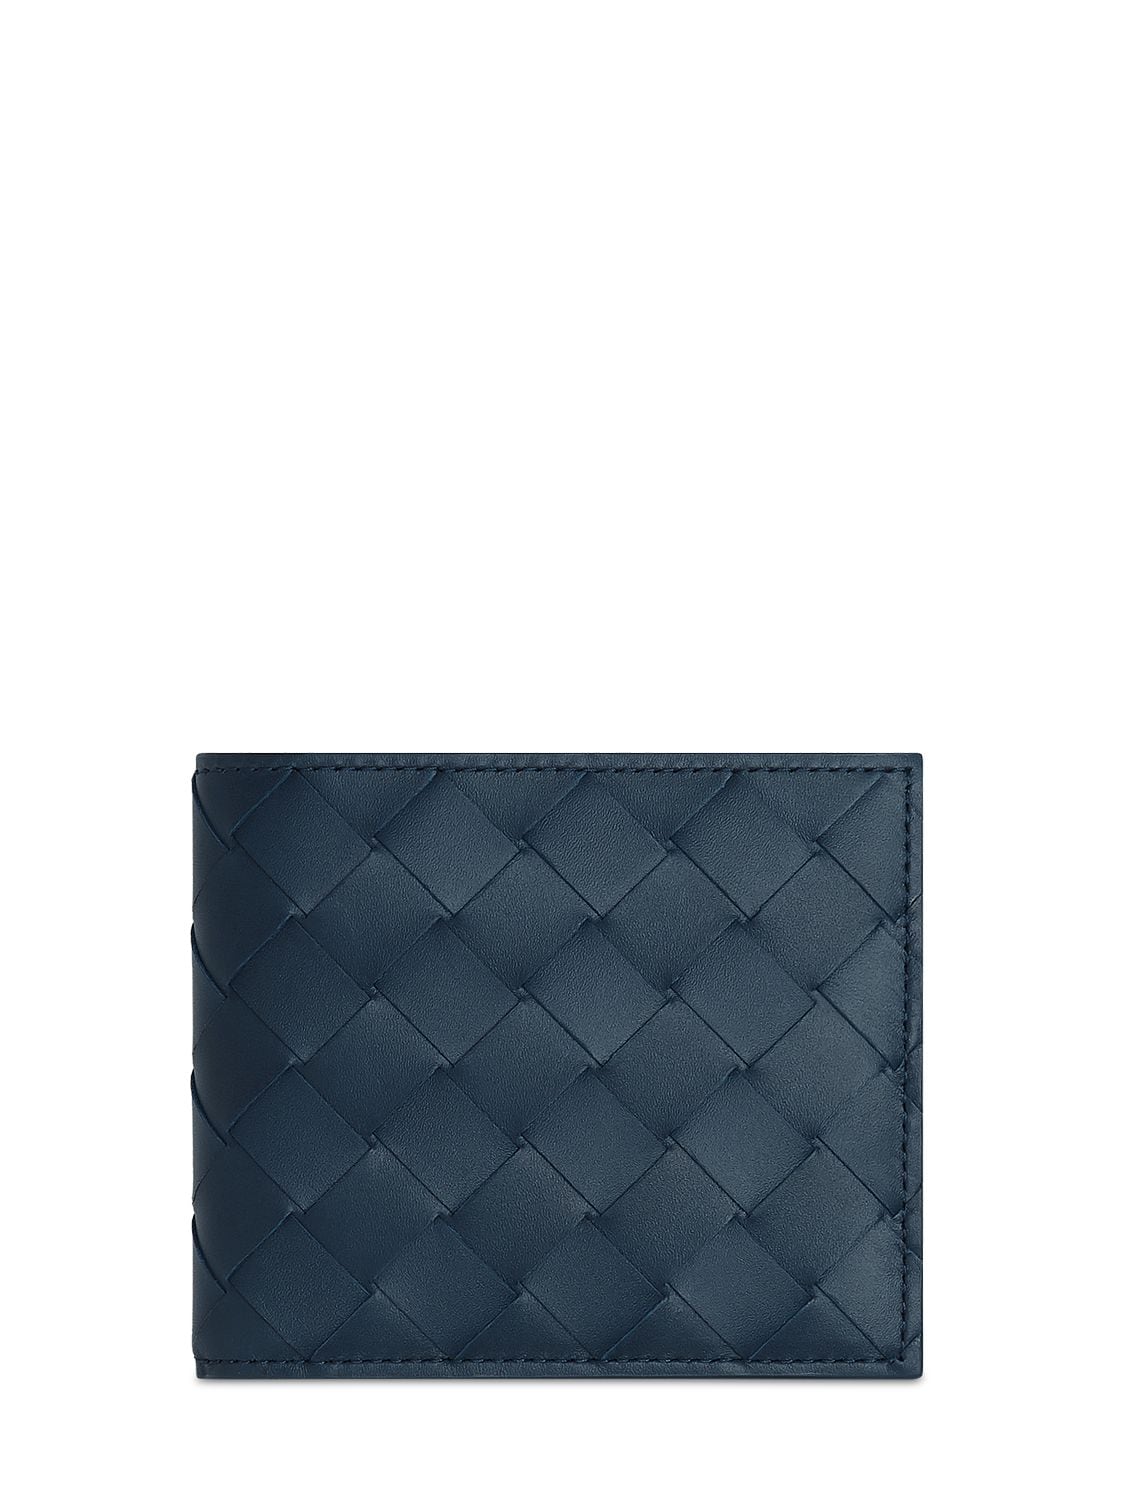 Image of Leather Bi-fold Wallet